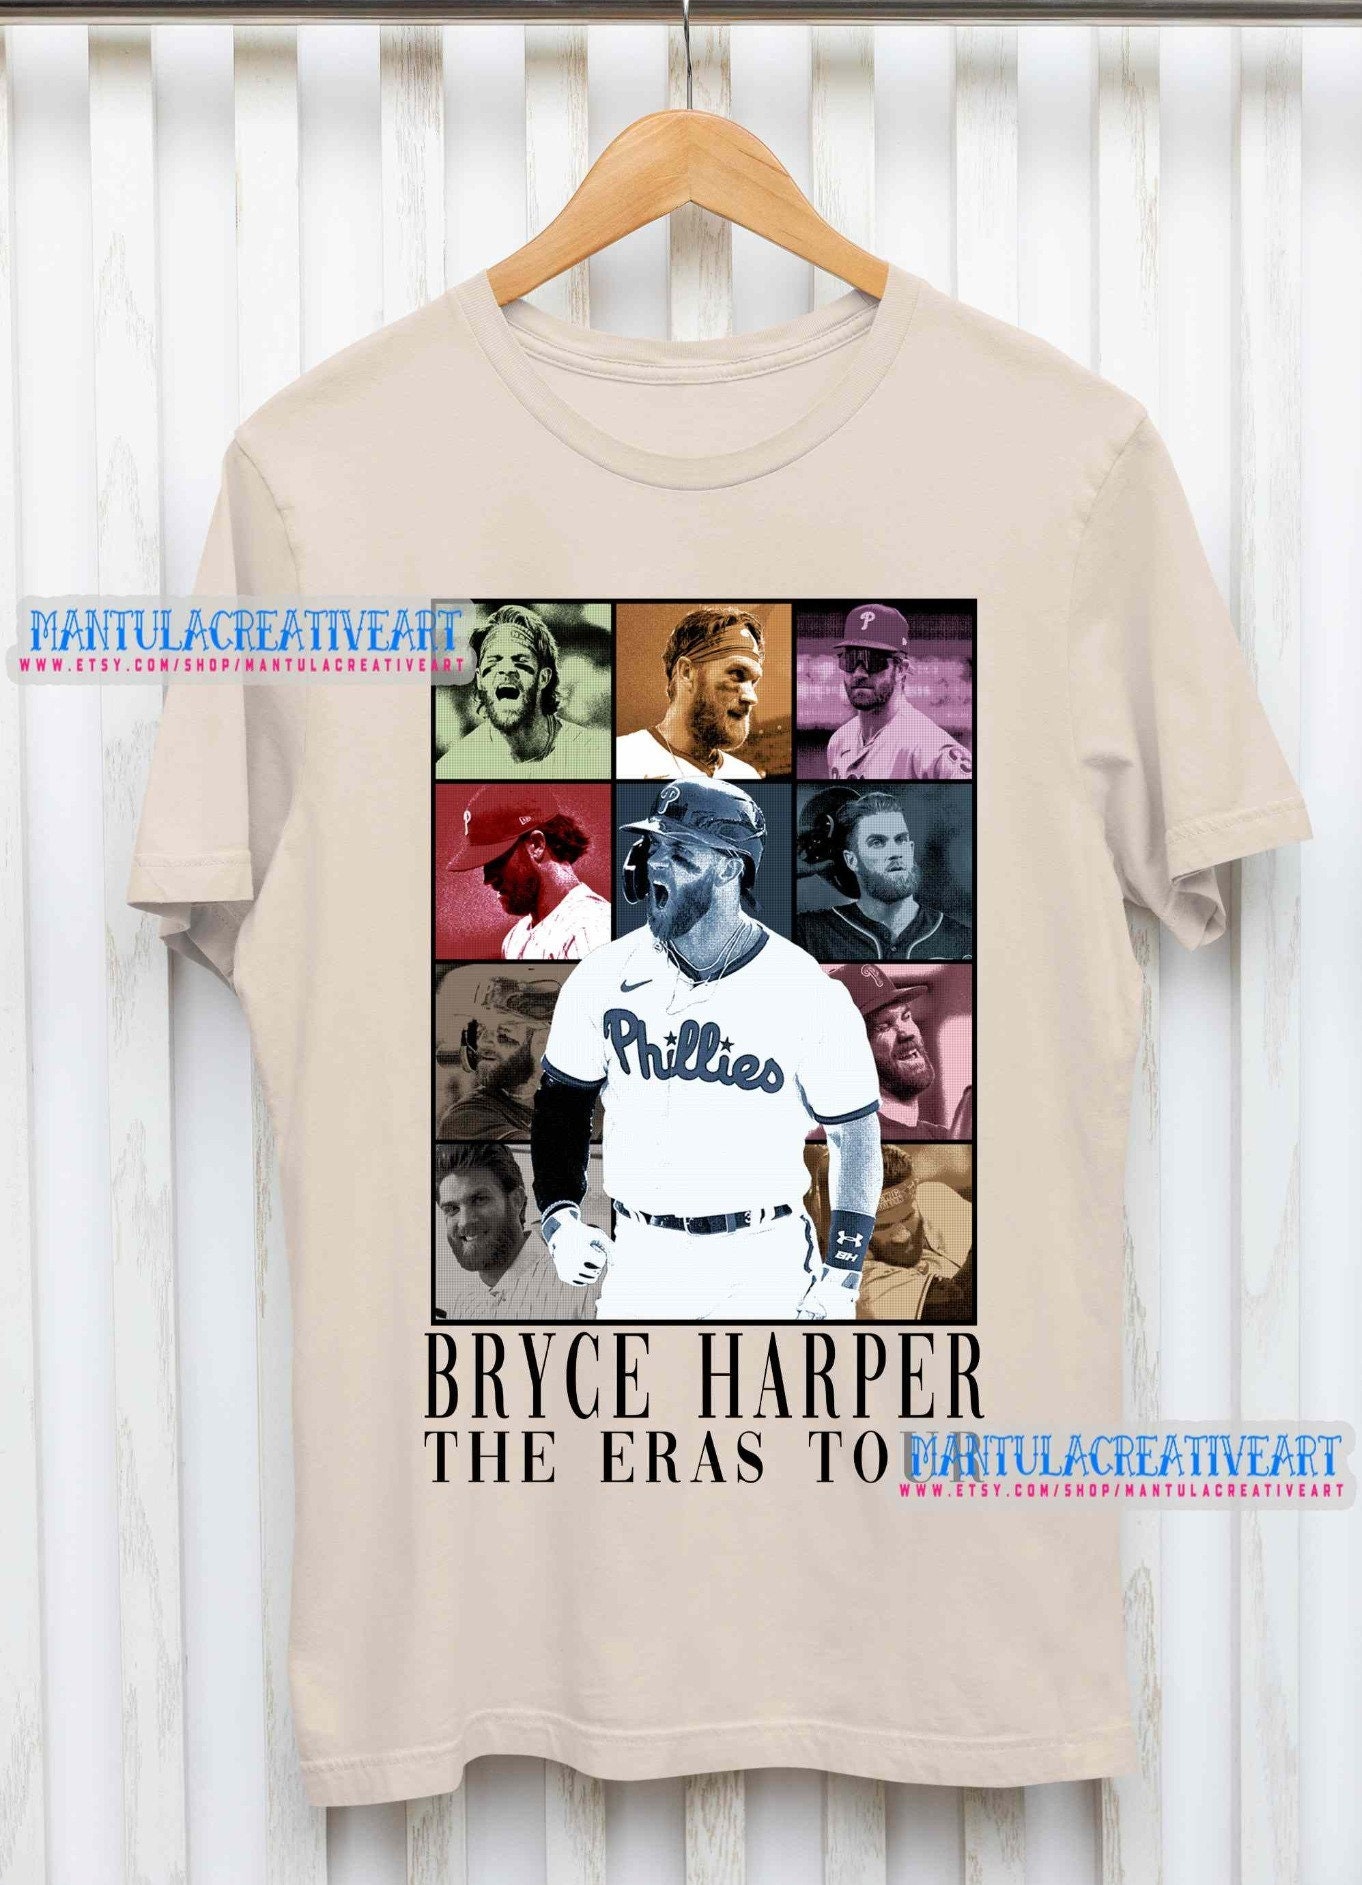 Men's Majestic Bryce Harper Red Philadelphia Phillies Name & Number T-Shirt  